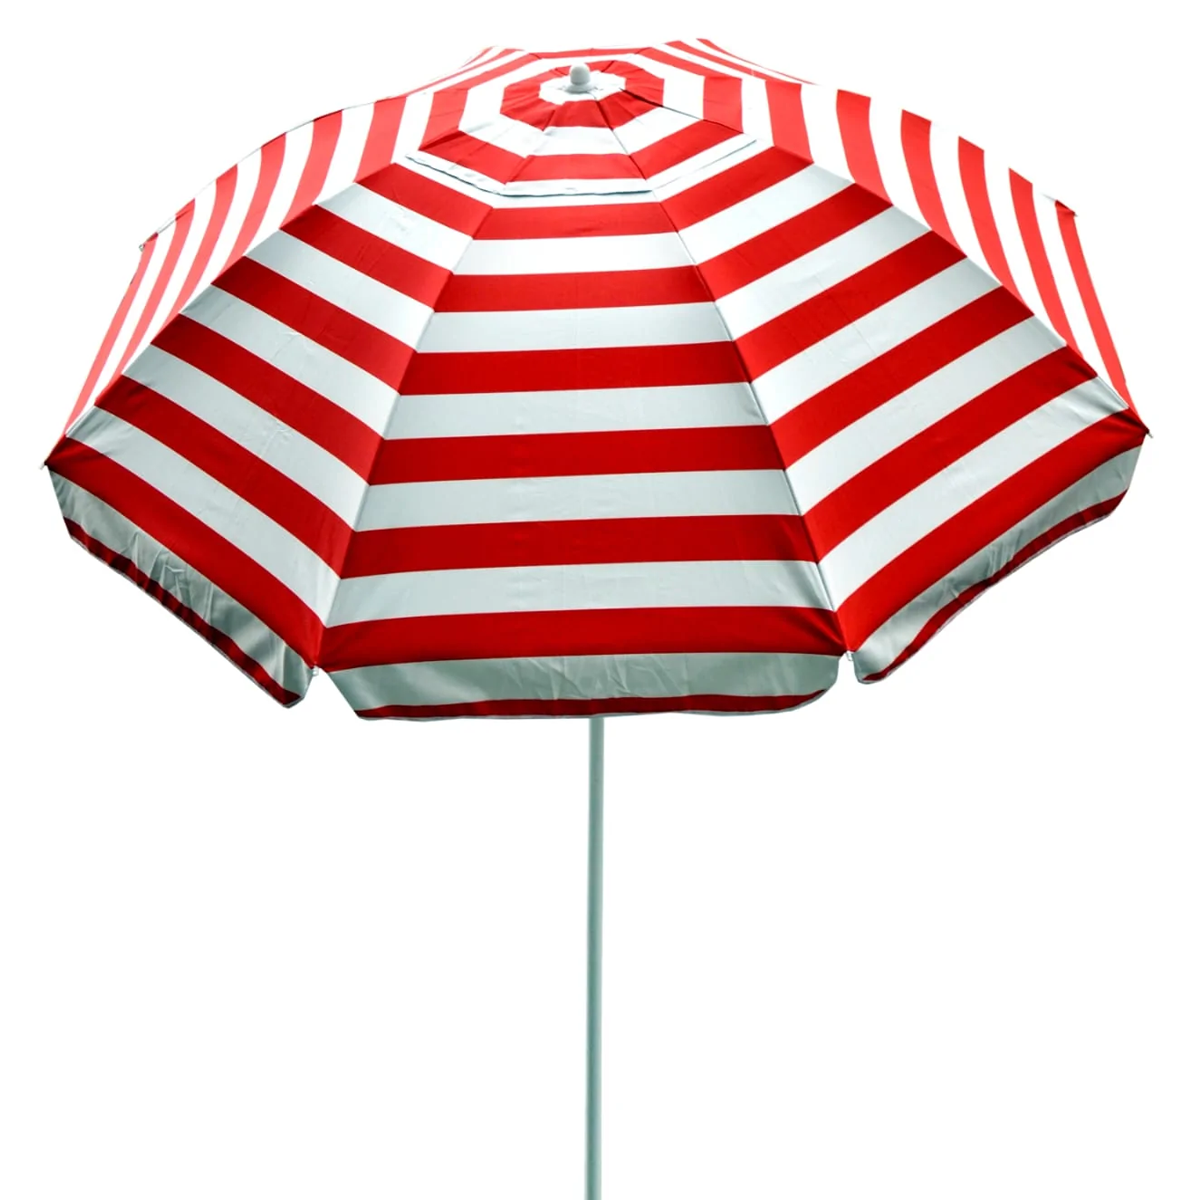 Procamp UV Beach Umbrella Large - 2.4M